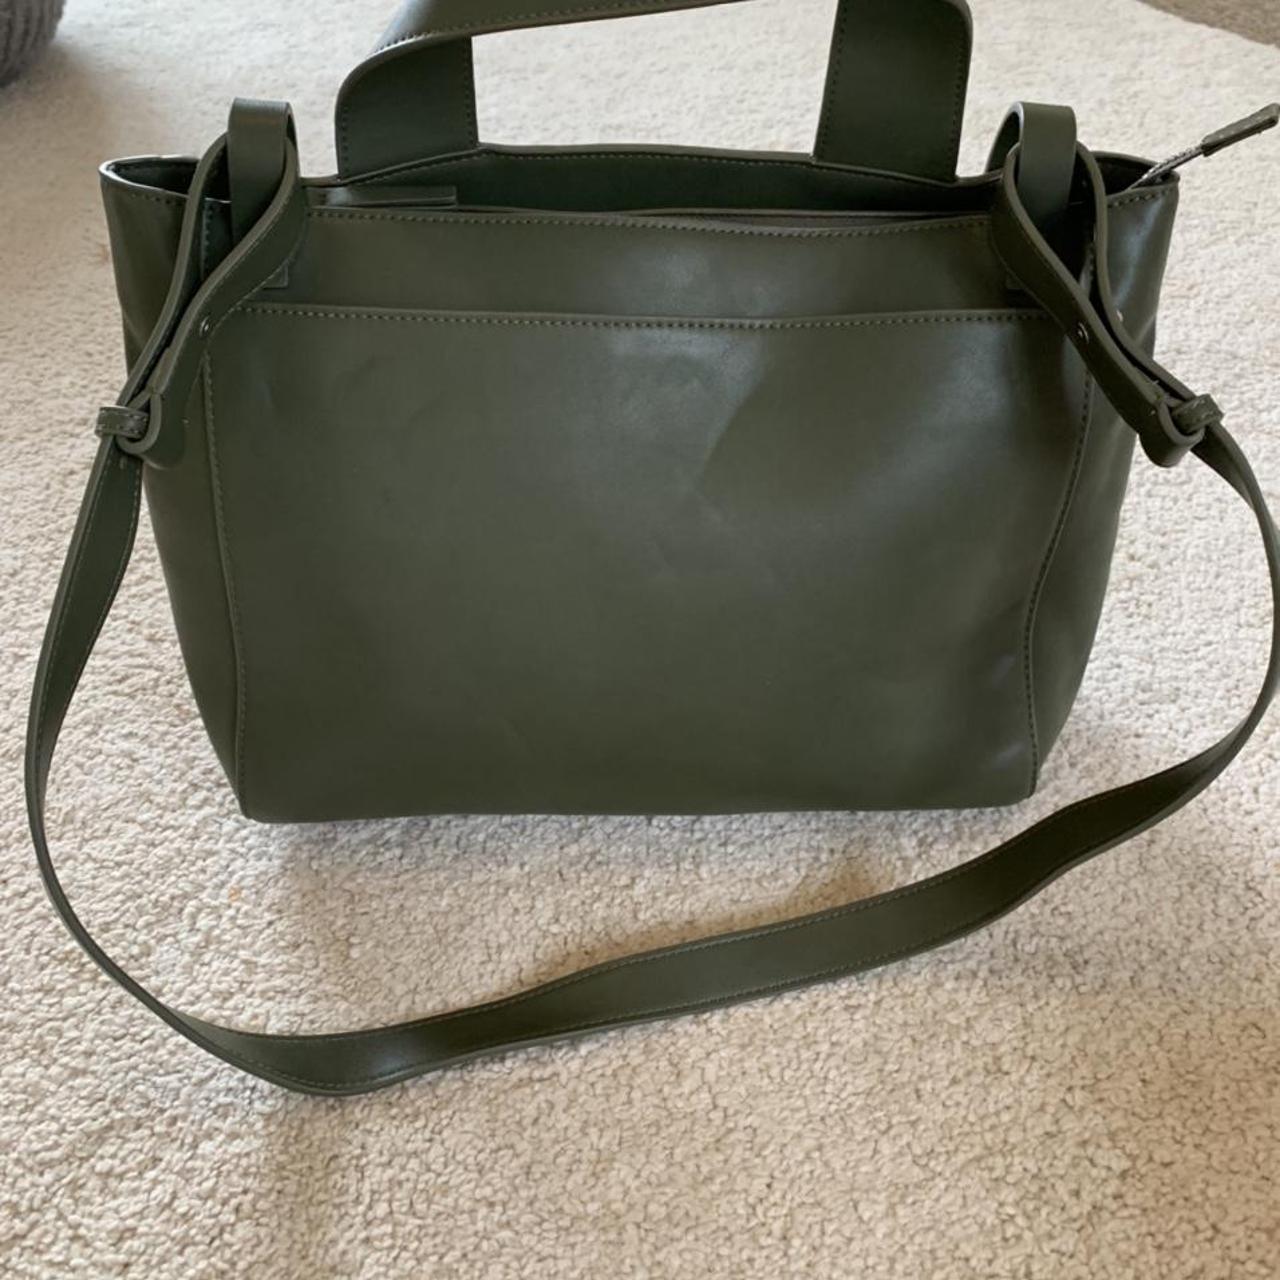 French Connection olive/khaki green handbag. Never... - Depop